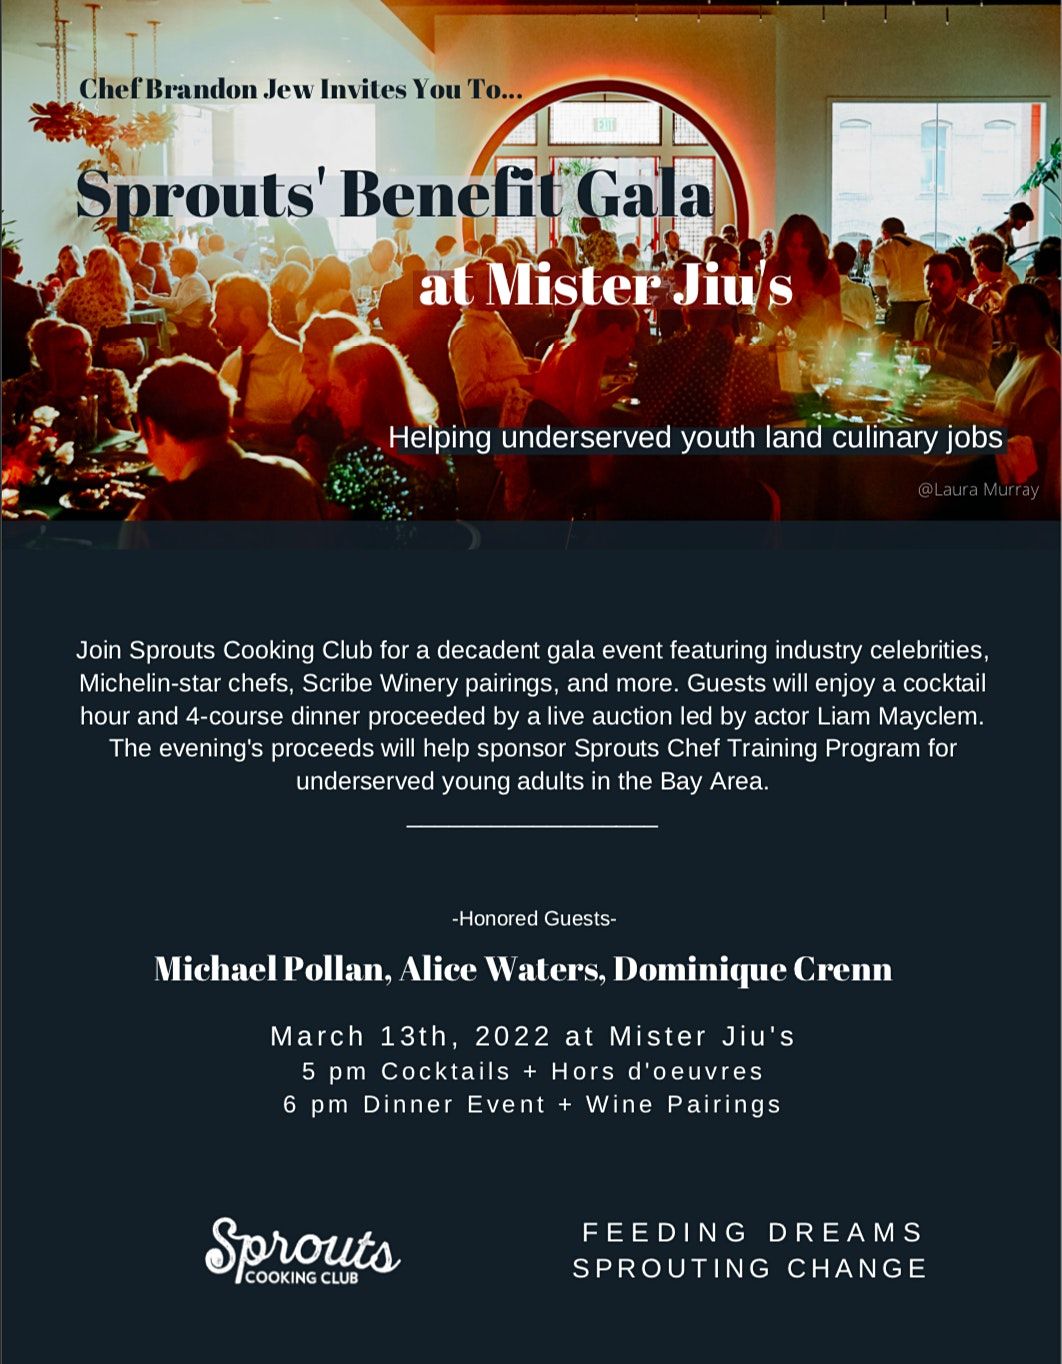 Sprouts' Fundraising Gala at Mister Jiu's